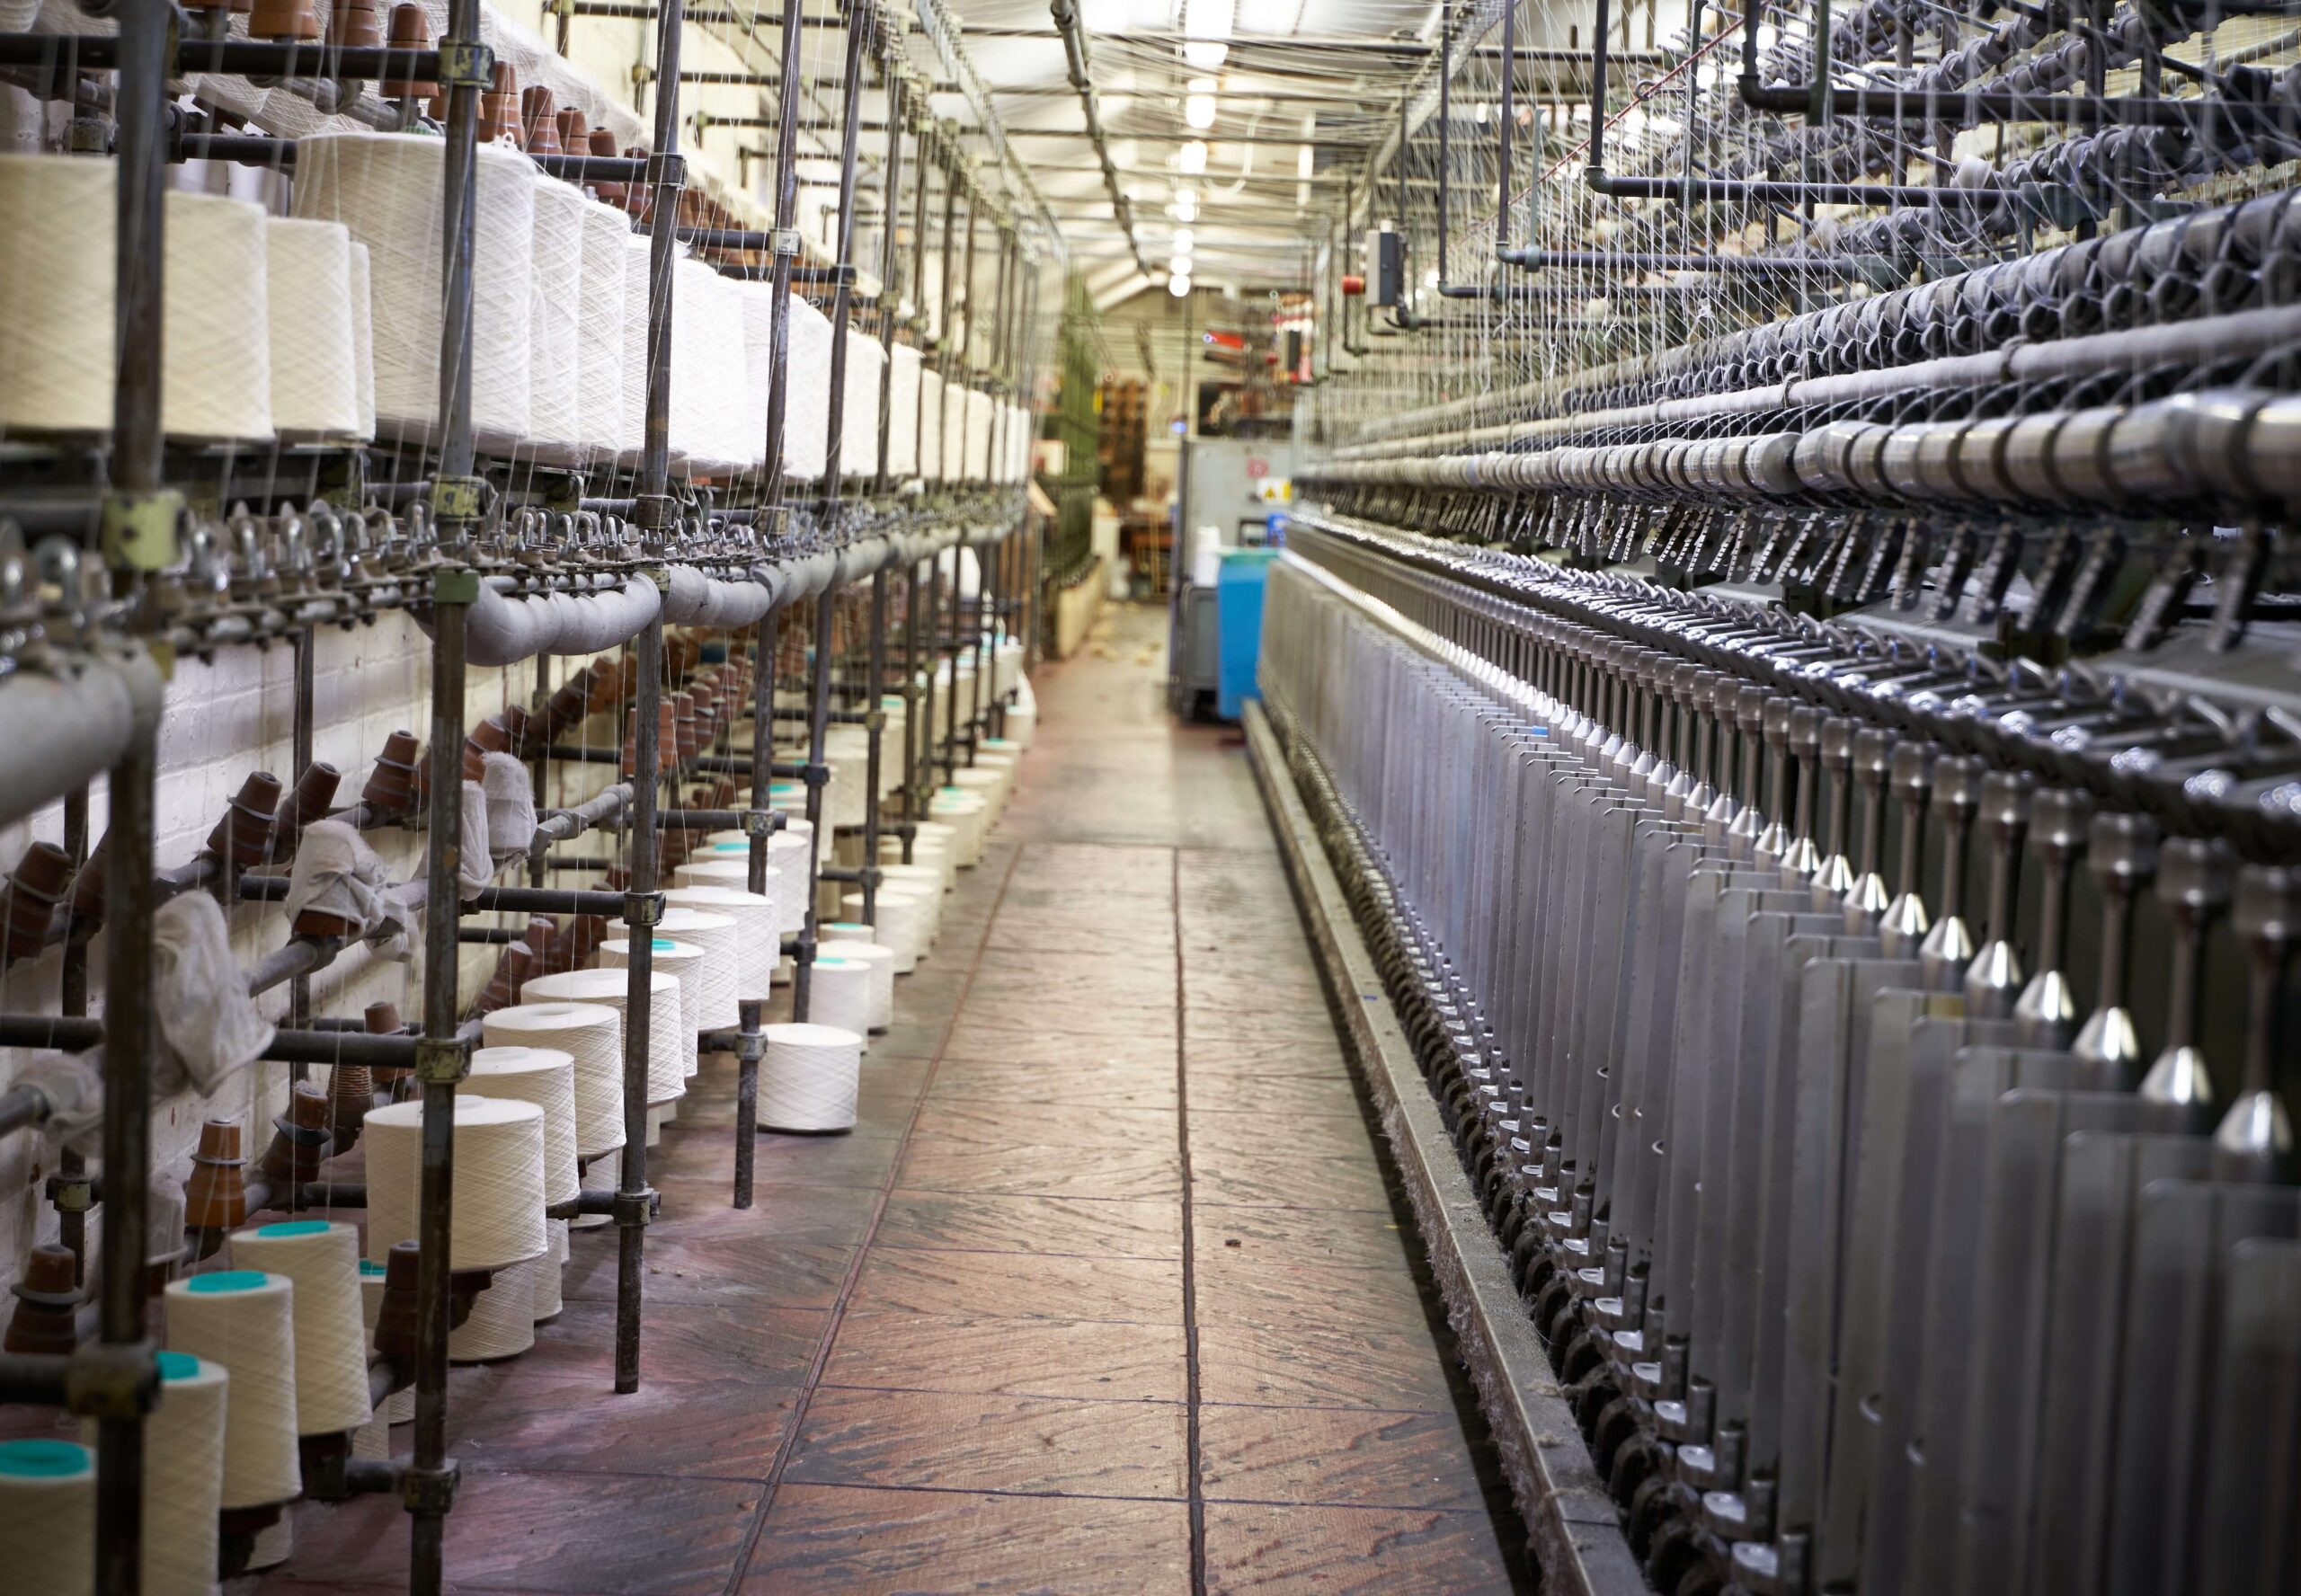 Linton Tweed factory creating and producing tweed in Carlisle.